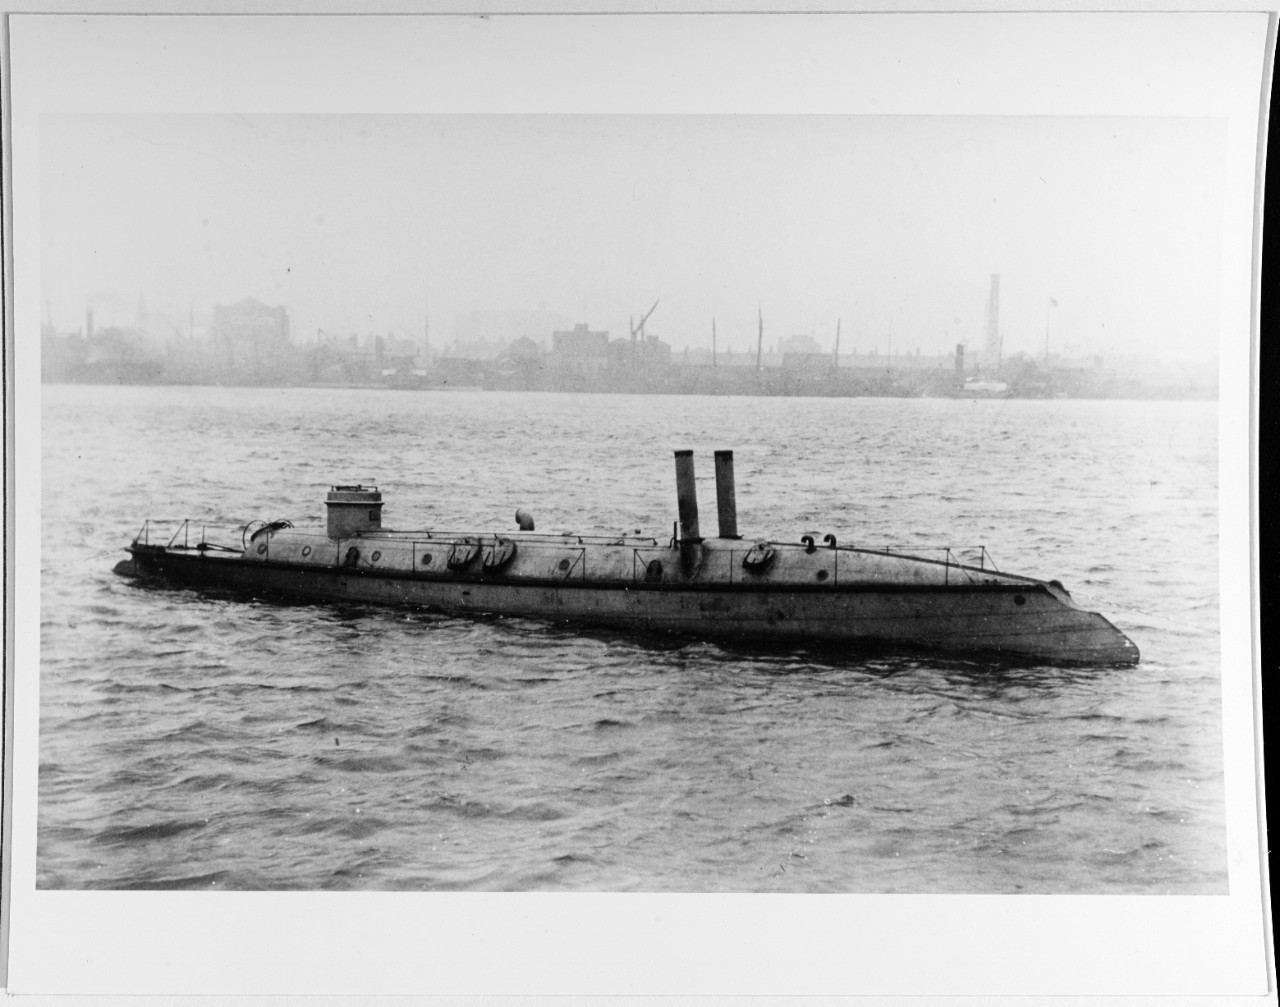 Second class torpedo boat, built for the Brazilian ironclad RIACHUELO, 9 January 1884.